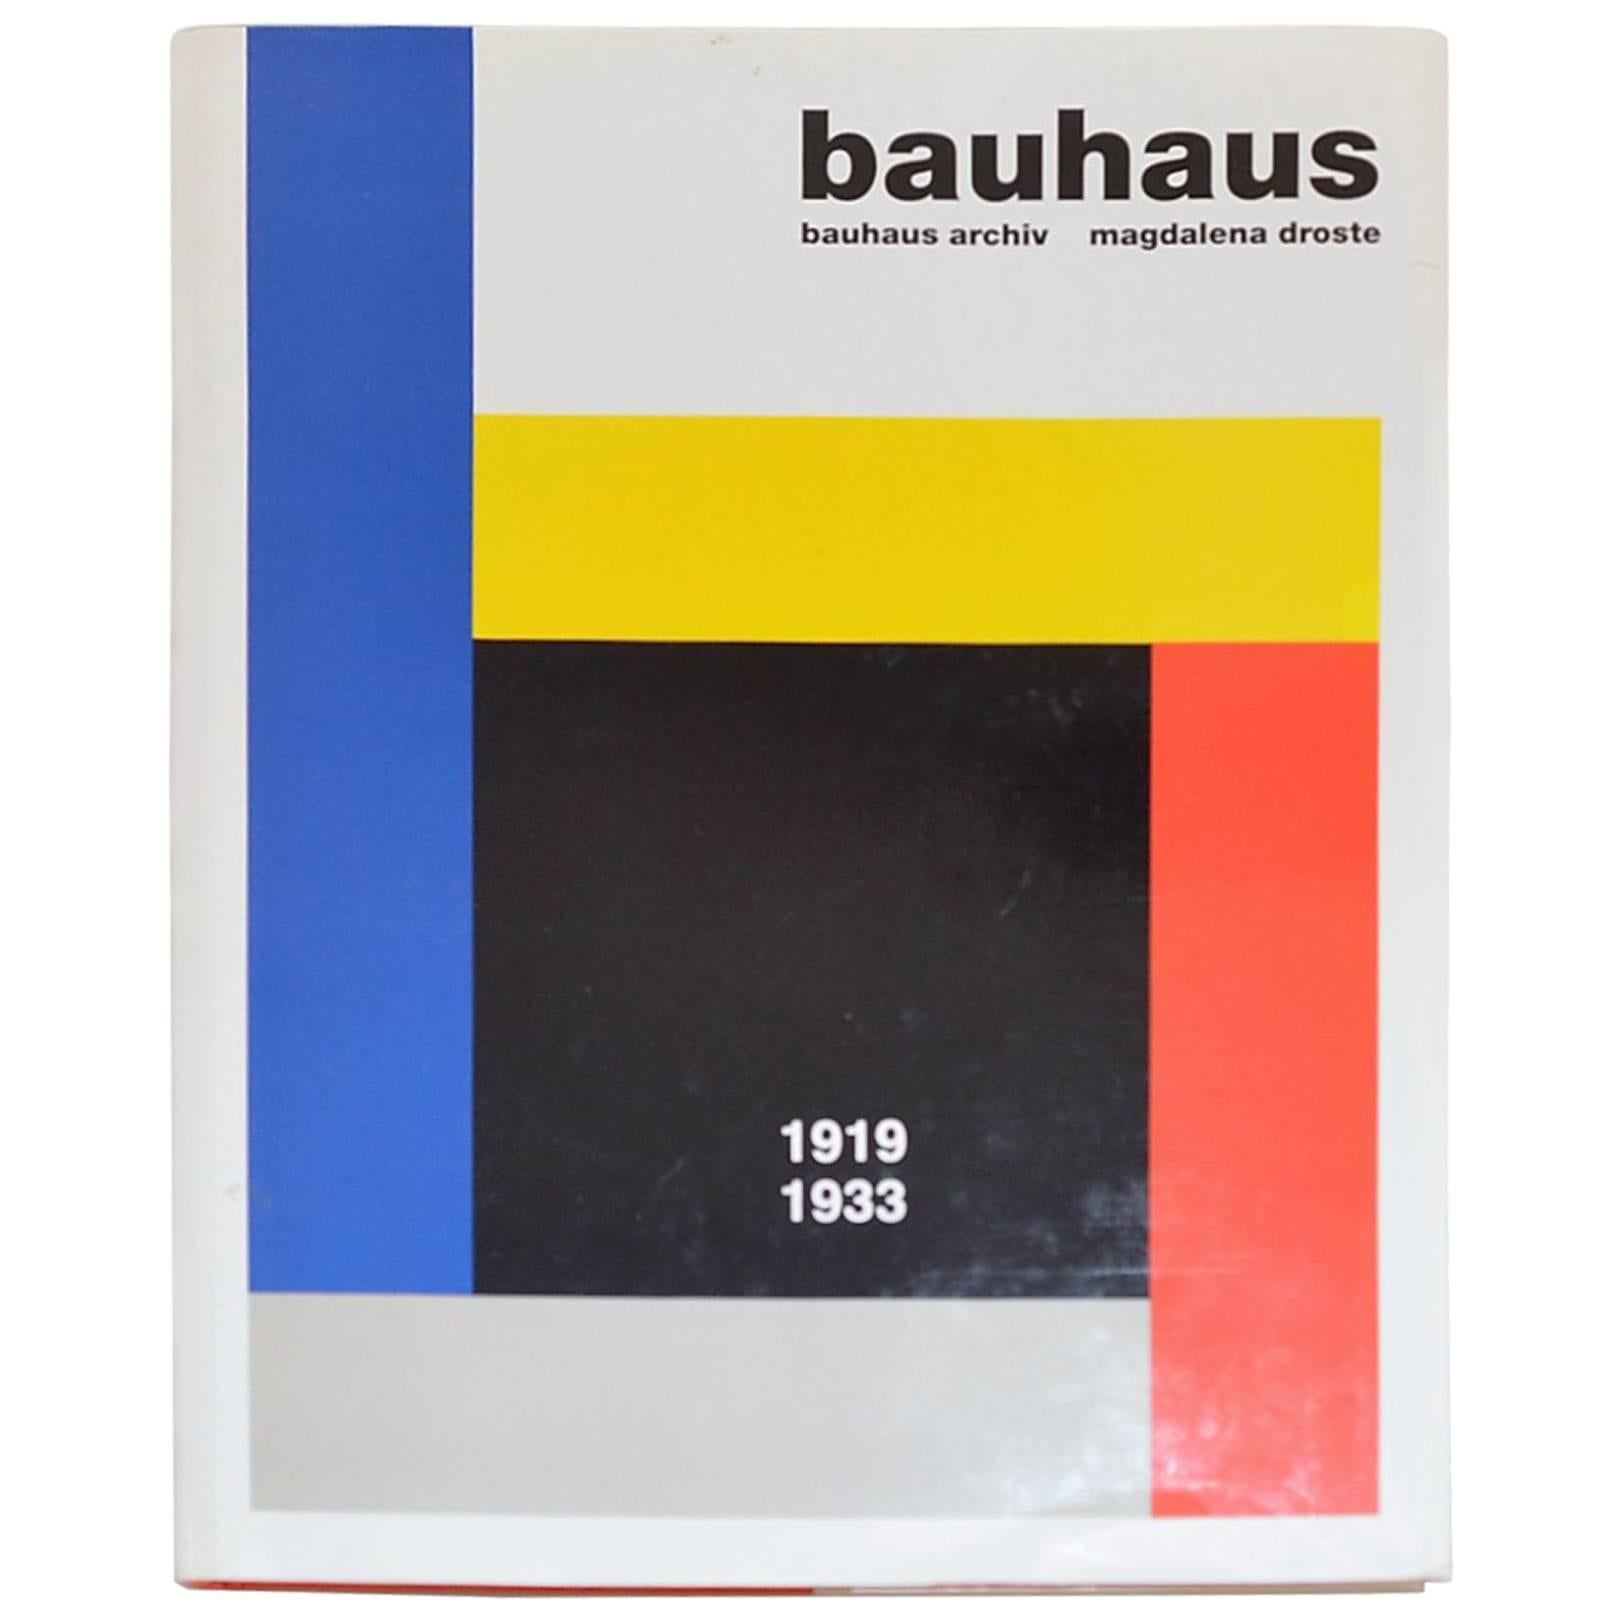 Bauhaus, Magdalena Droste, Edition Taschen, 1998 For Sale